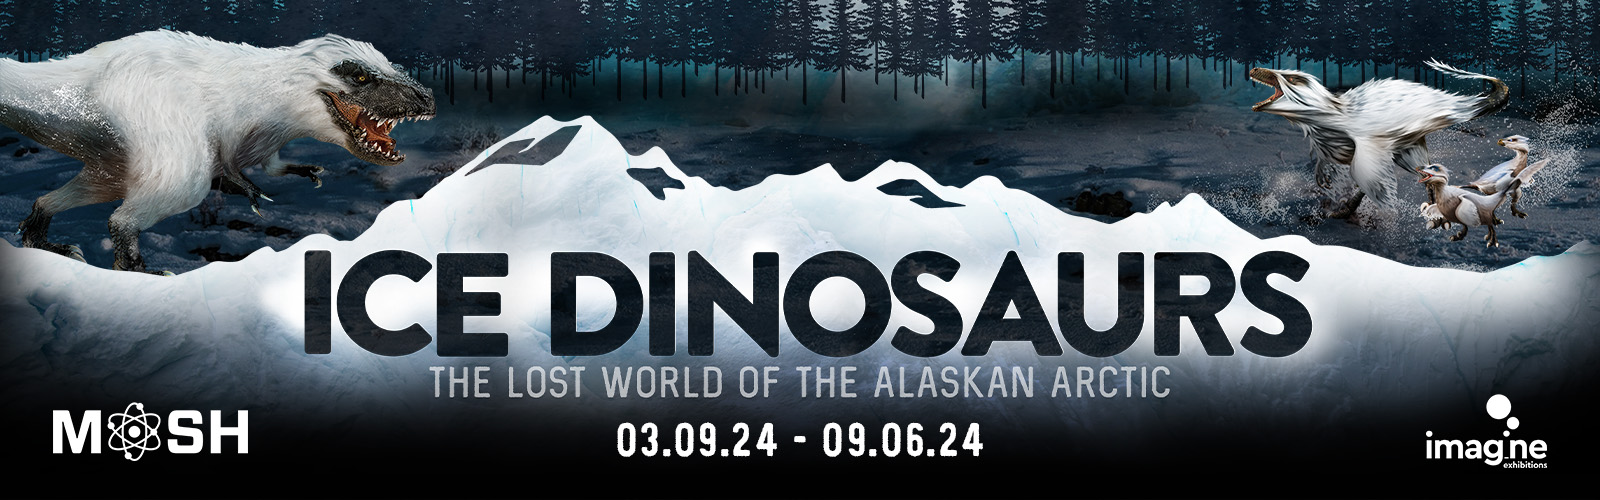 Ice Dinosaurs Exhibit; The Lost World of the Alaskan Artctic